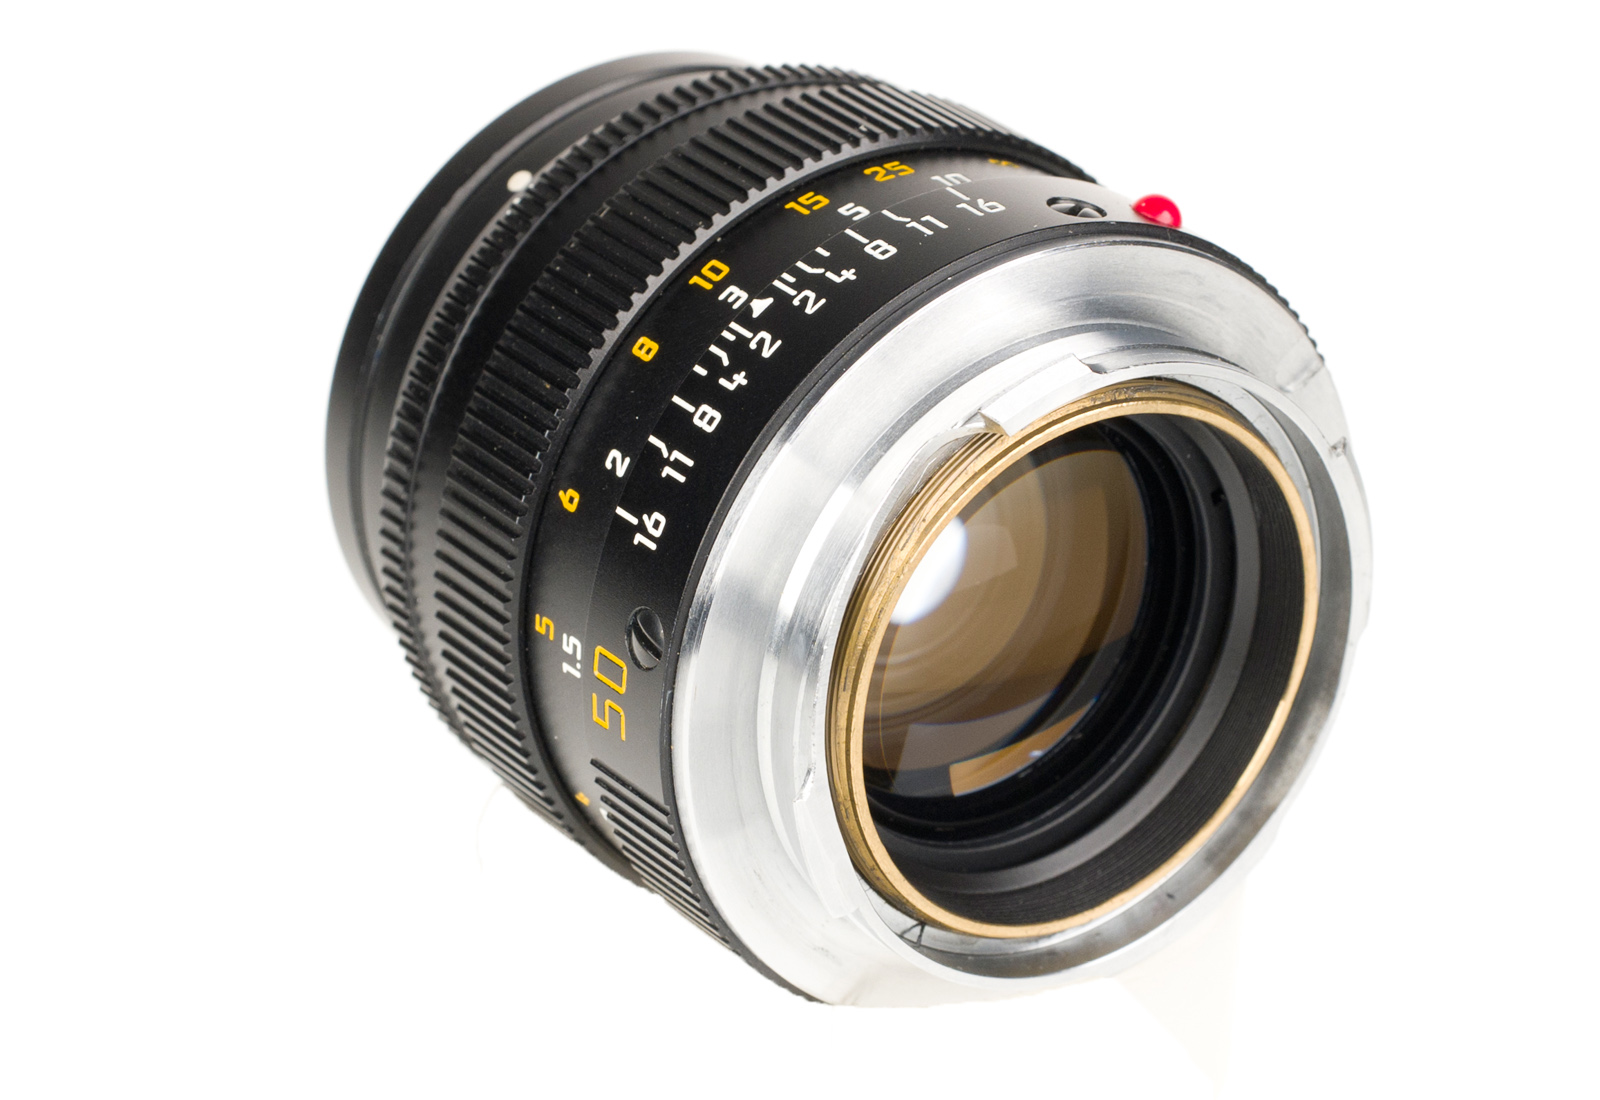 Leica Summilux-M 1:1,4/50mm II, black 11114